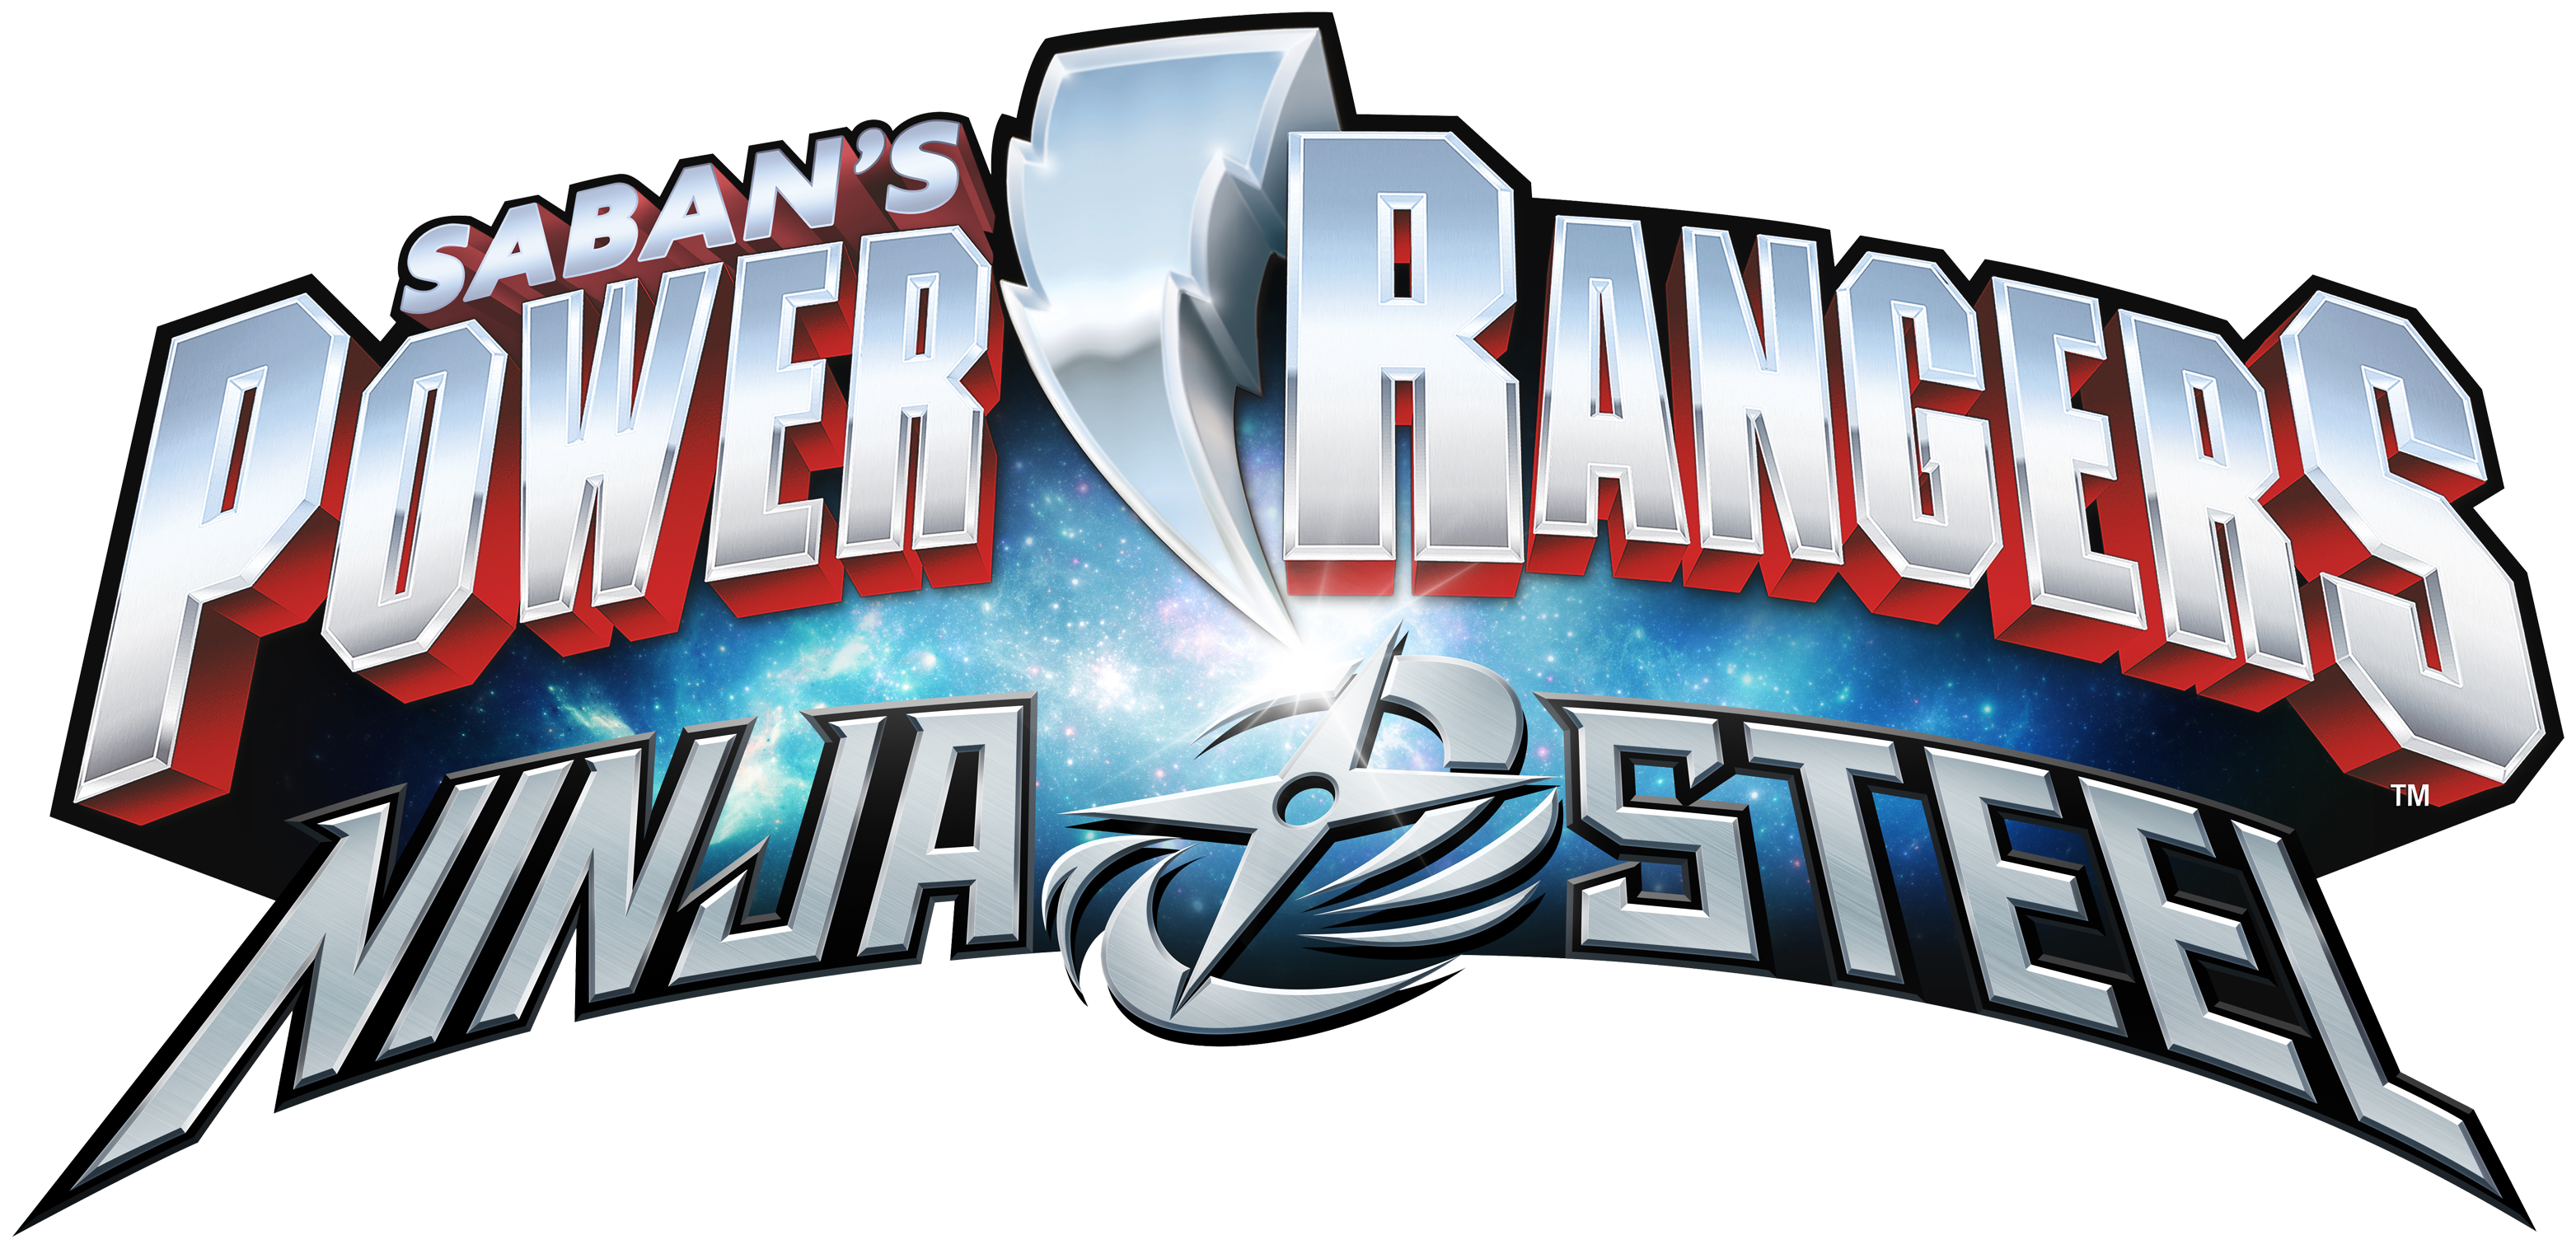 Power Rangers Ninja Steel, Power Rangers Brasil Wiki